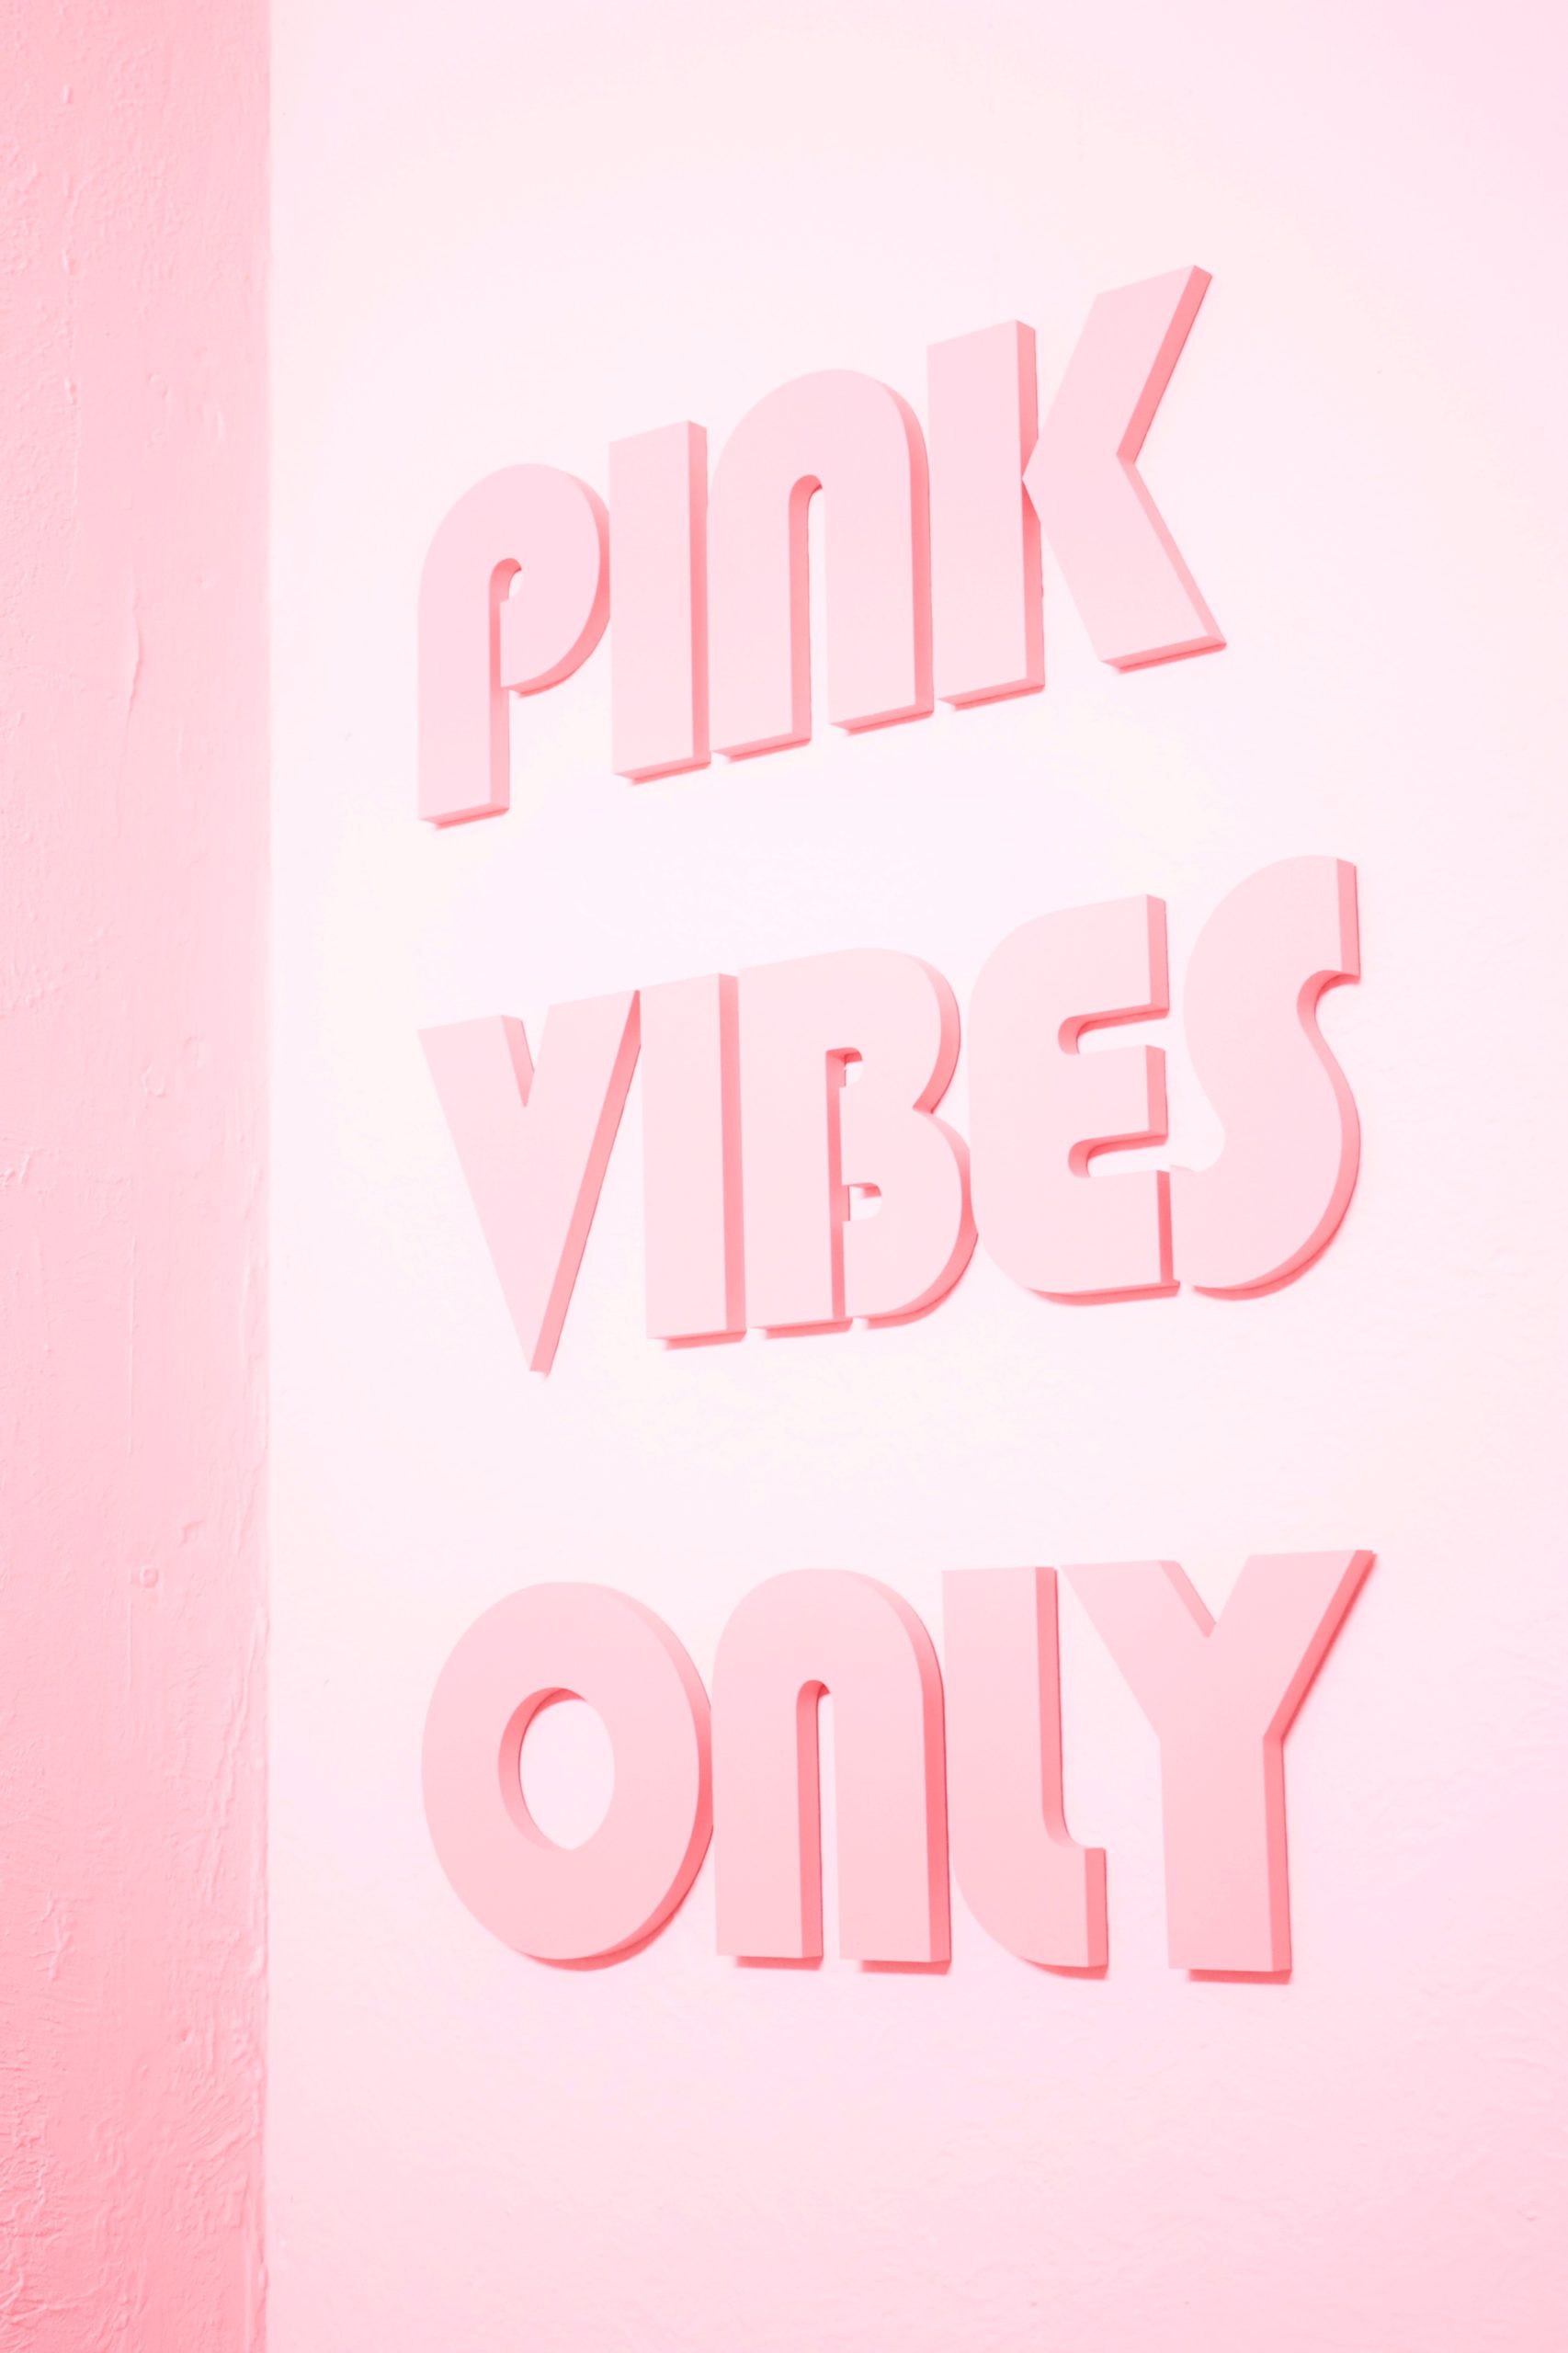 <img src="pink.jpg" alt="pink vibes only wallpaper"/> 